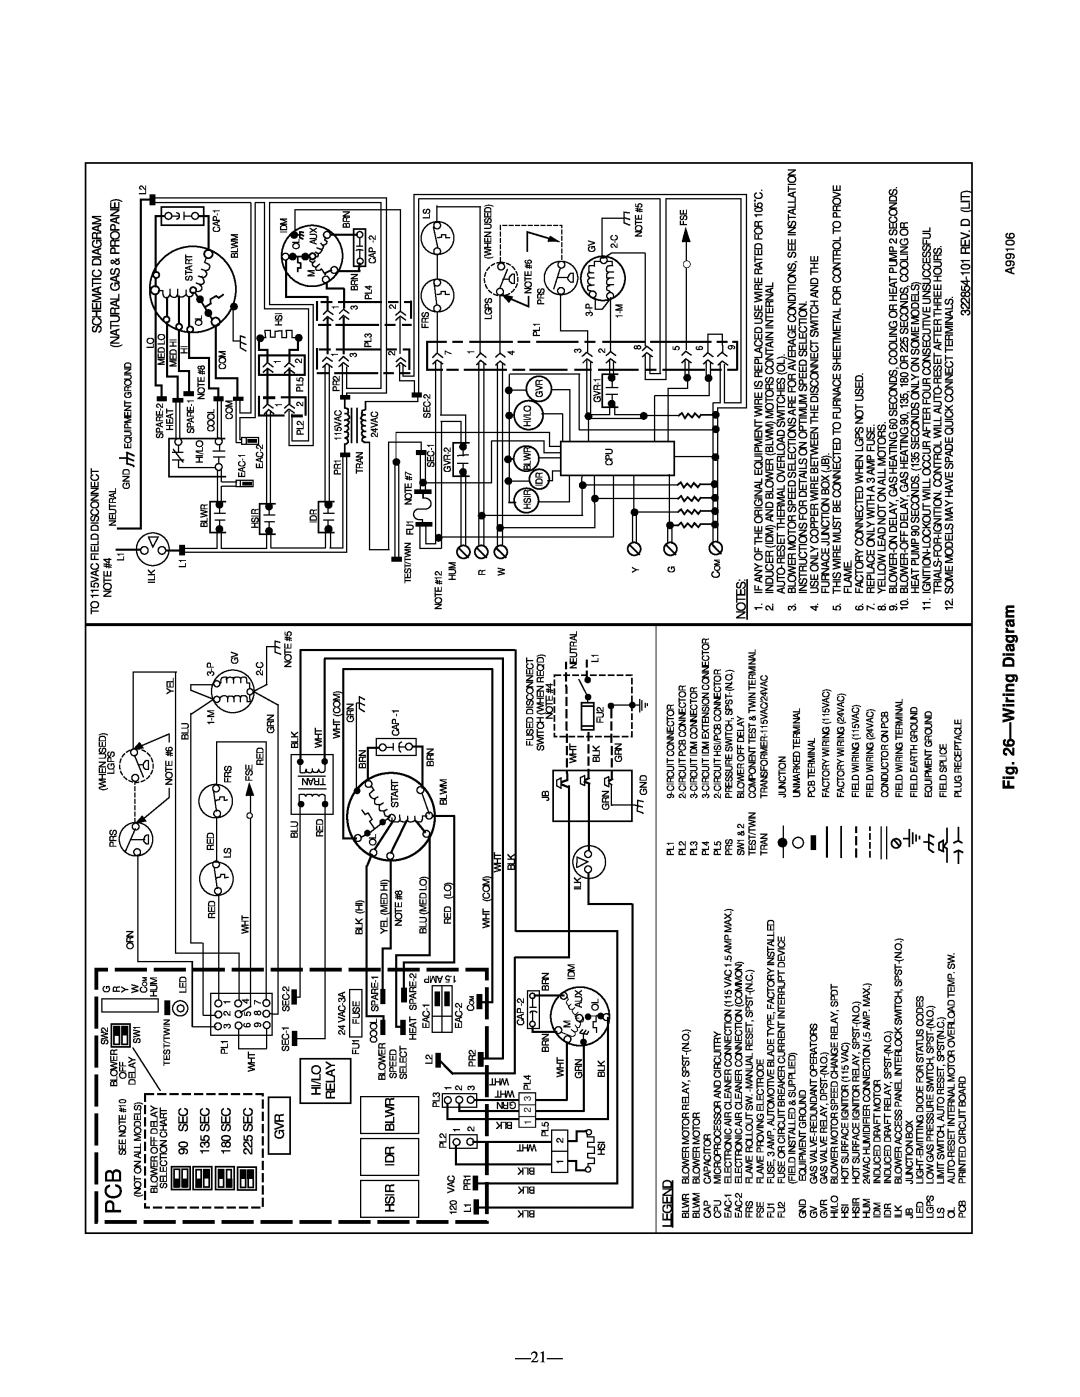 Bryant 345MAV instruction manual ÐWiring Diagram, Ð21Ð 